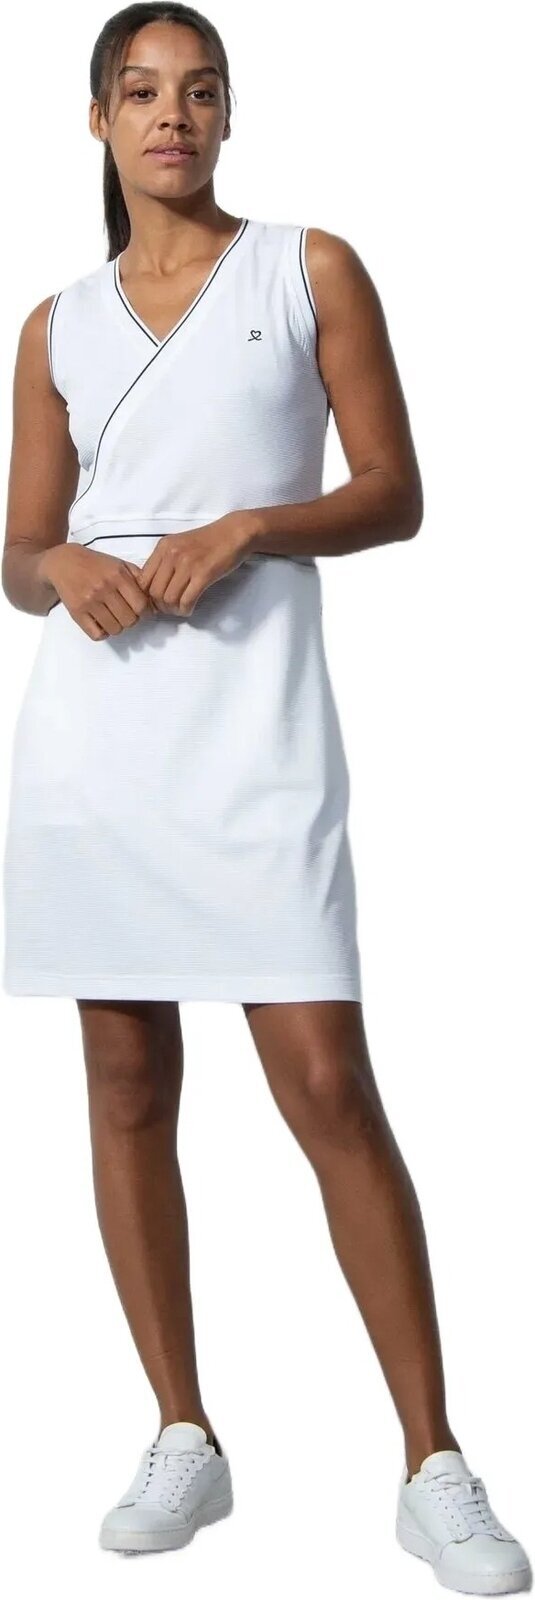 Skirt / Dress Daily Sports Paris Sleeveless Dress White M